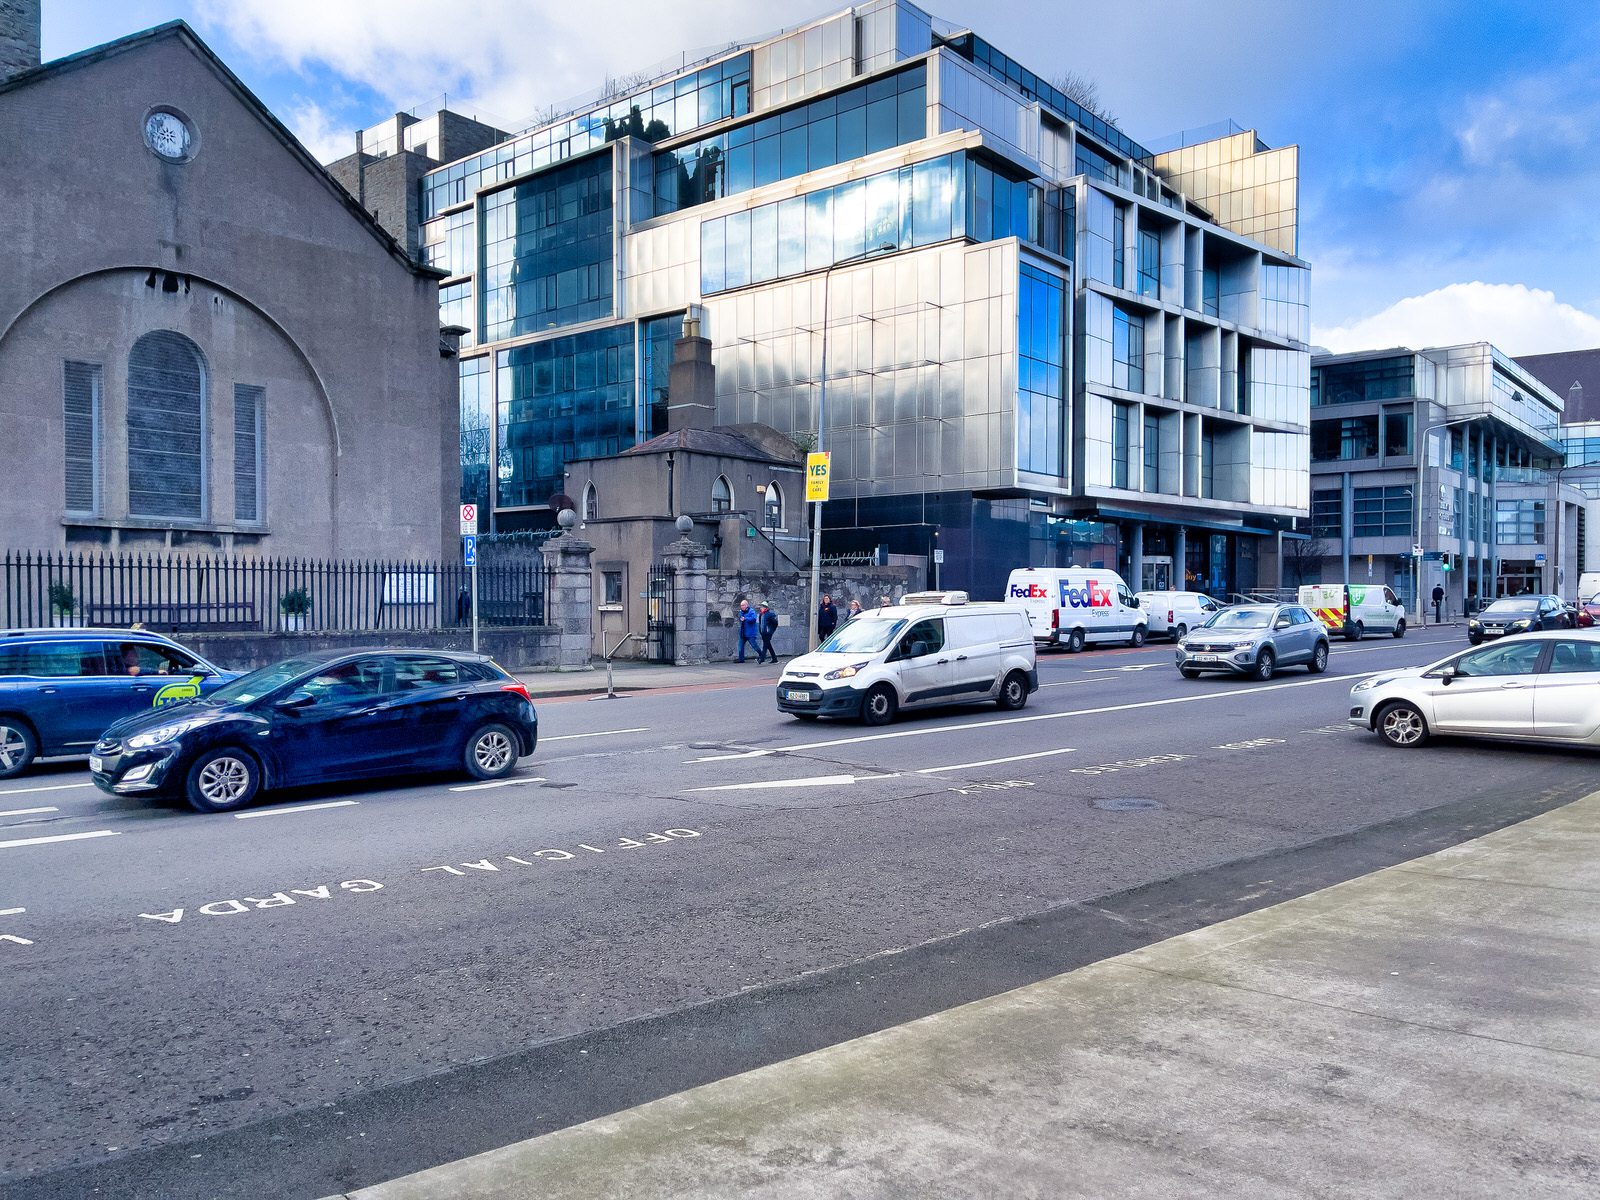 CHURCH STREET IN DUBLIN [HAS A RICH AND COMPLEX HISTORY]-228425-1